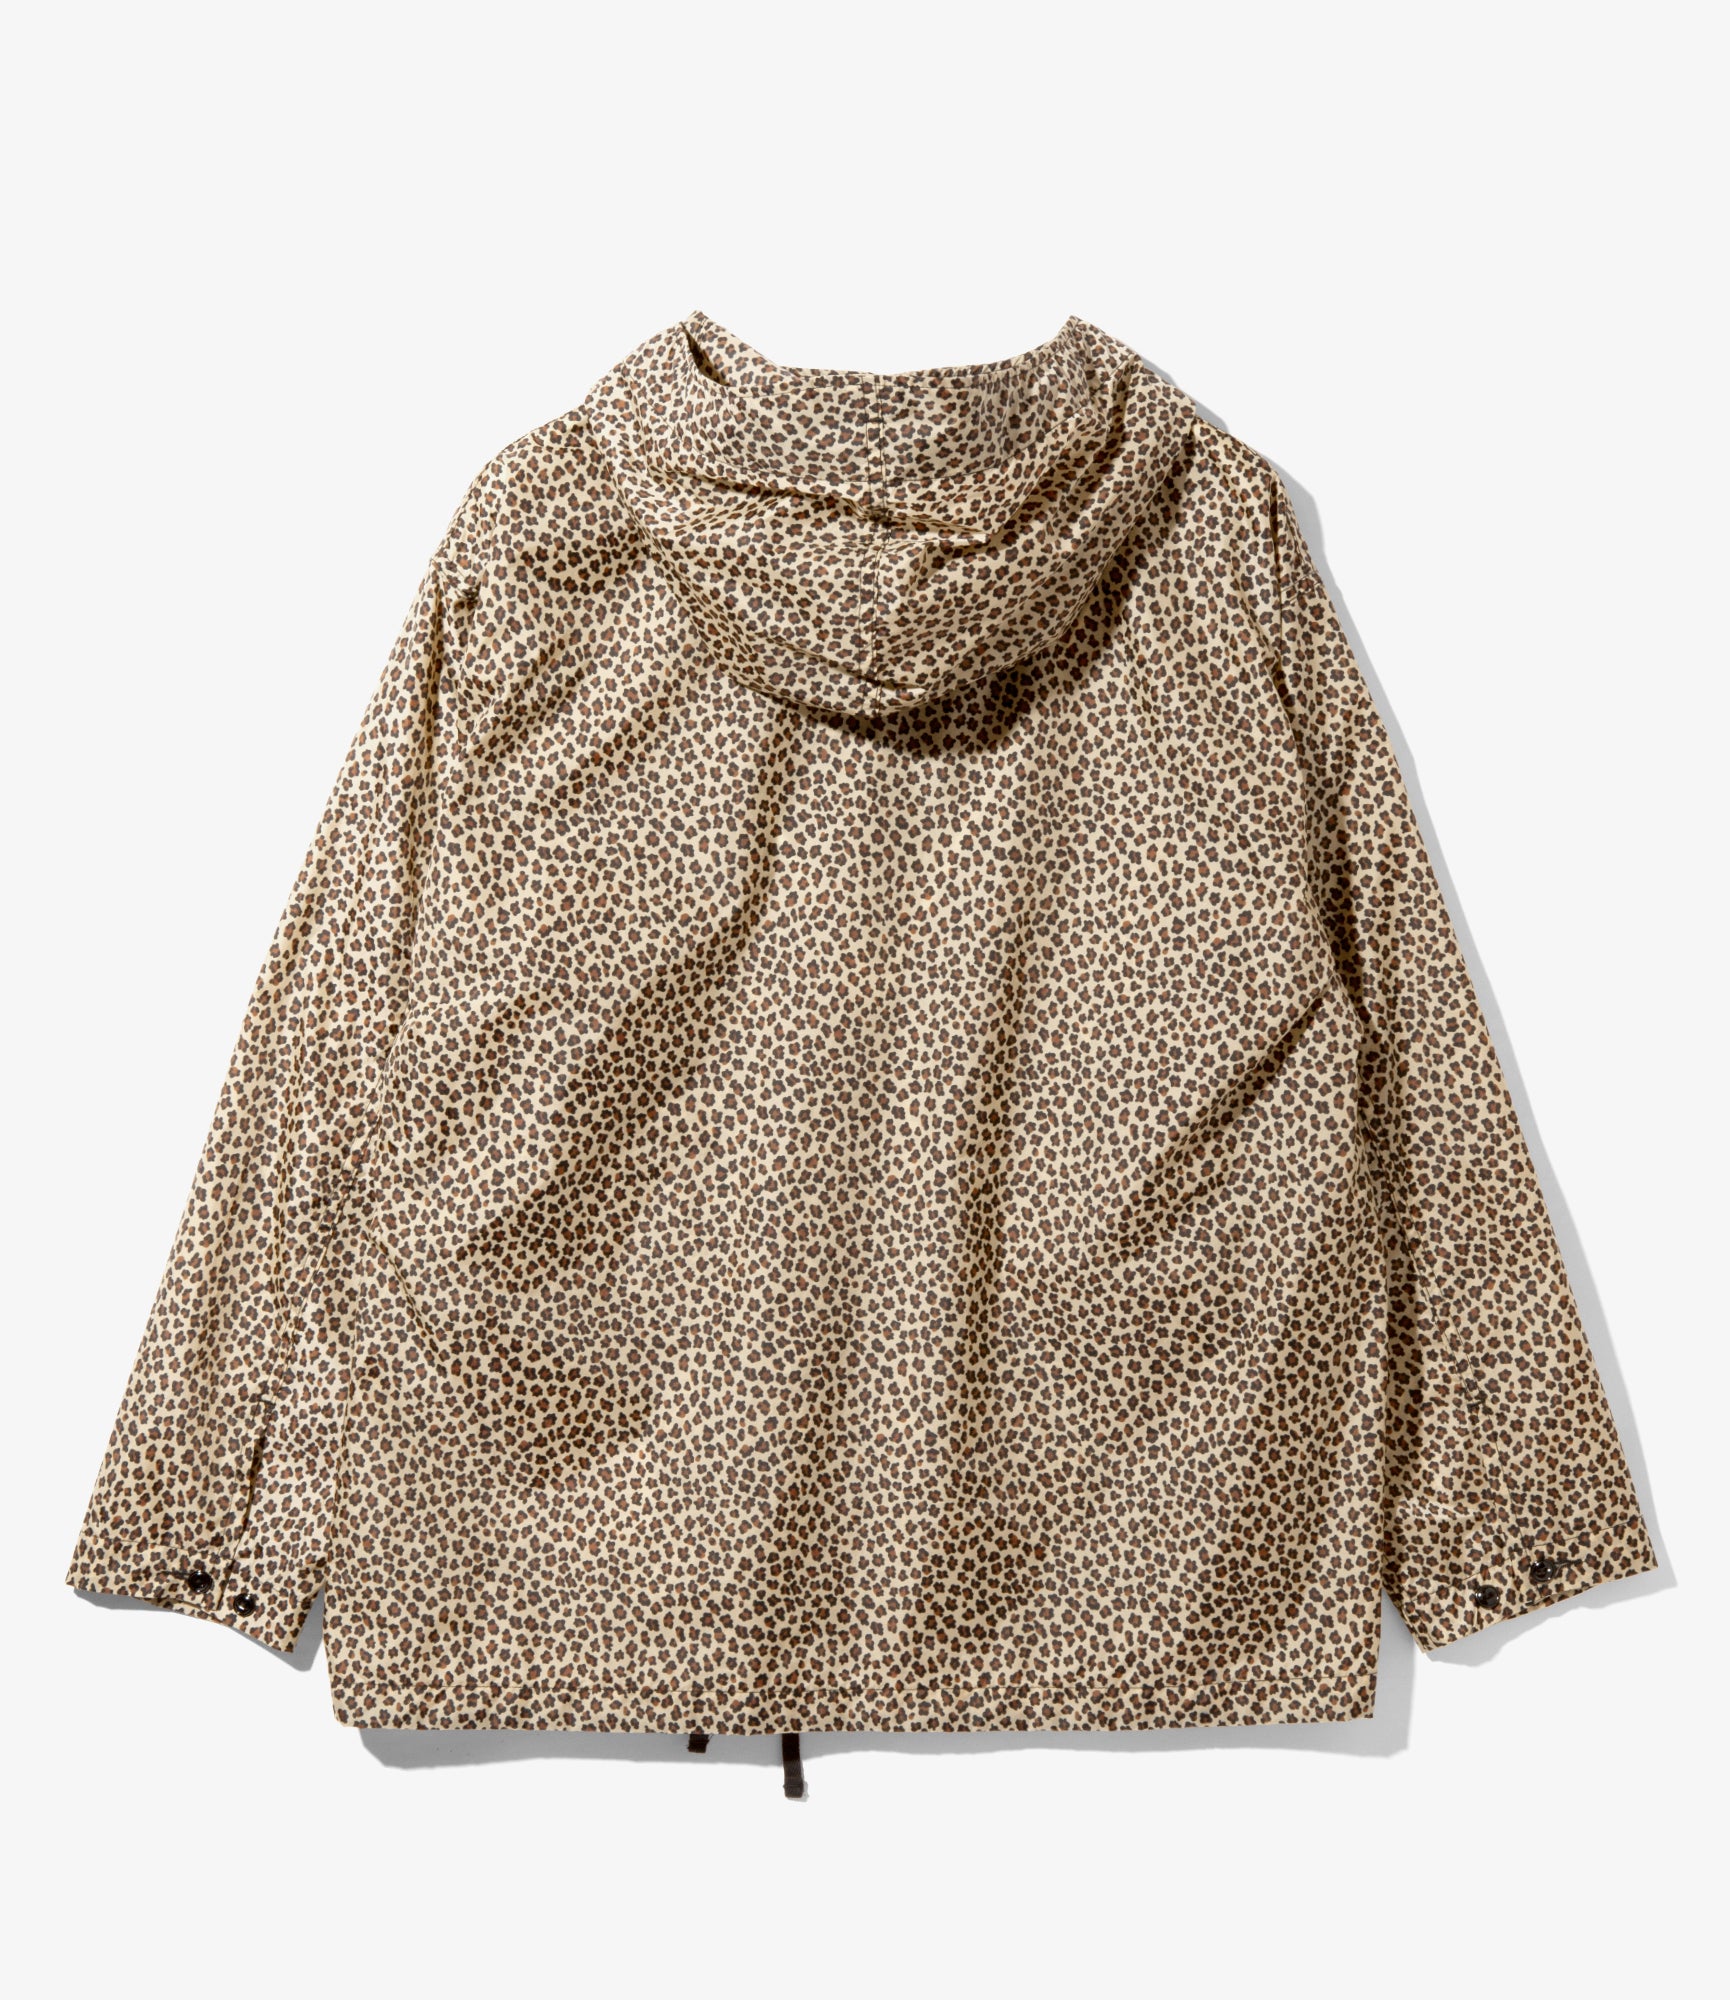 Engineered Garments Cagoule Shirt - Khaki Nylon Leopard Print